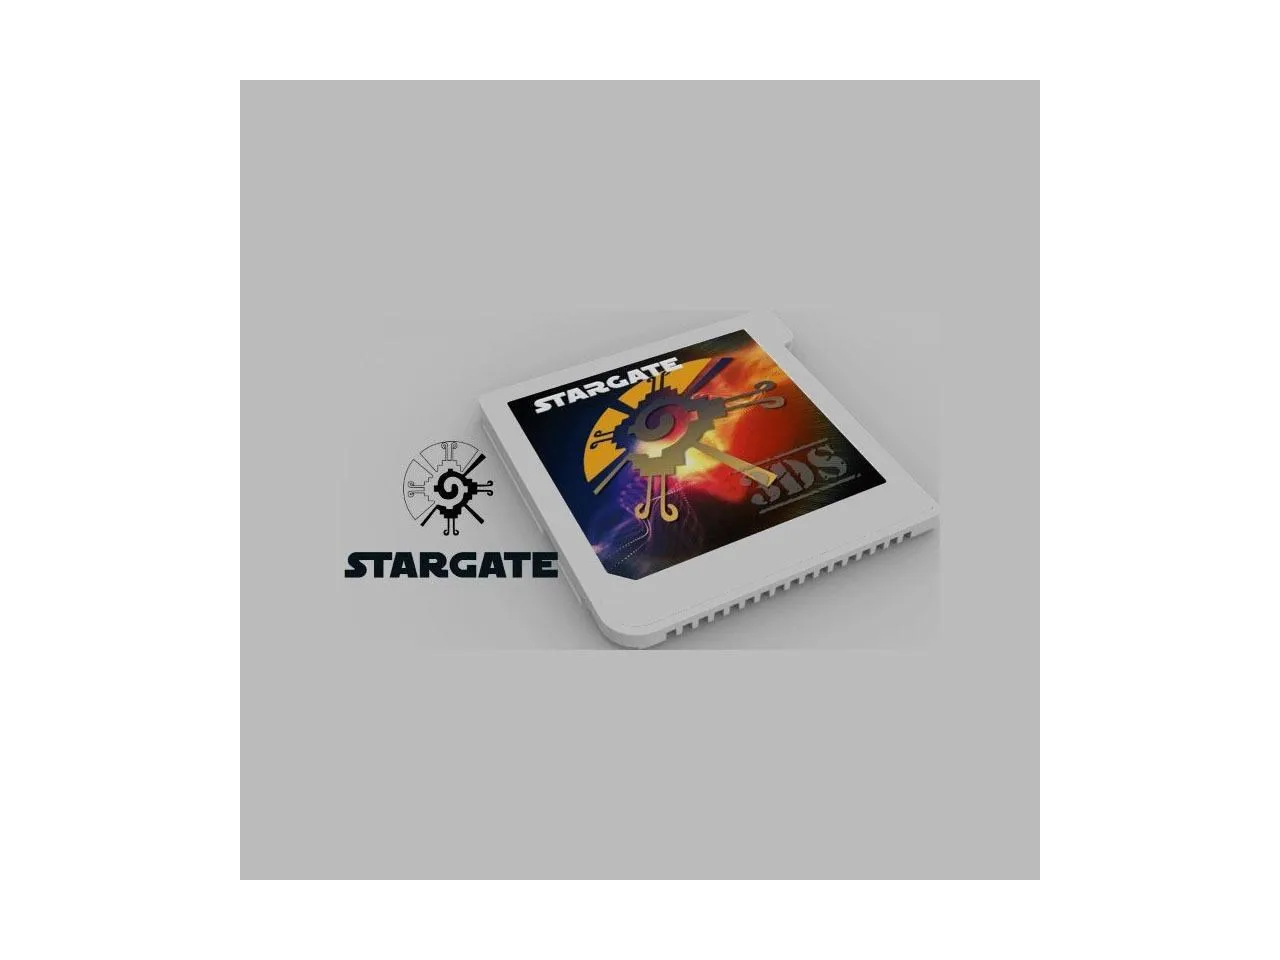 Stargate 3DS